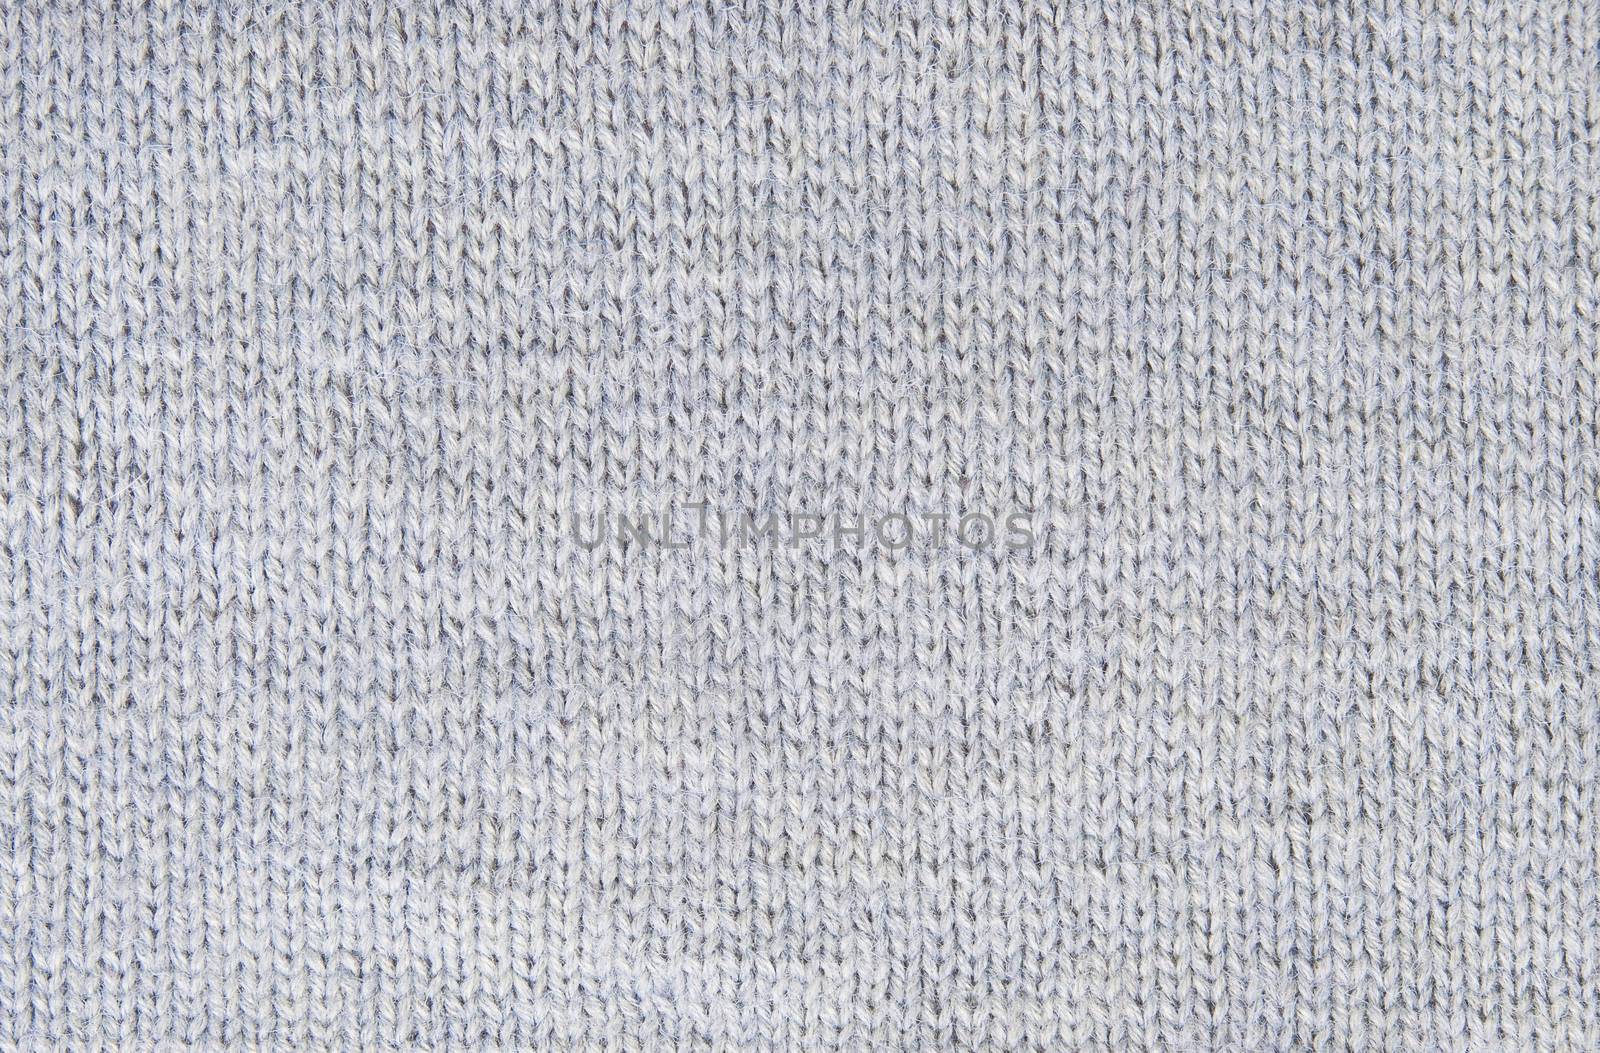 Background small pattern of gray wool knitting yarn by Cipariss